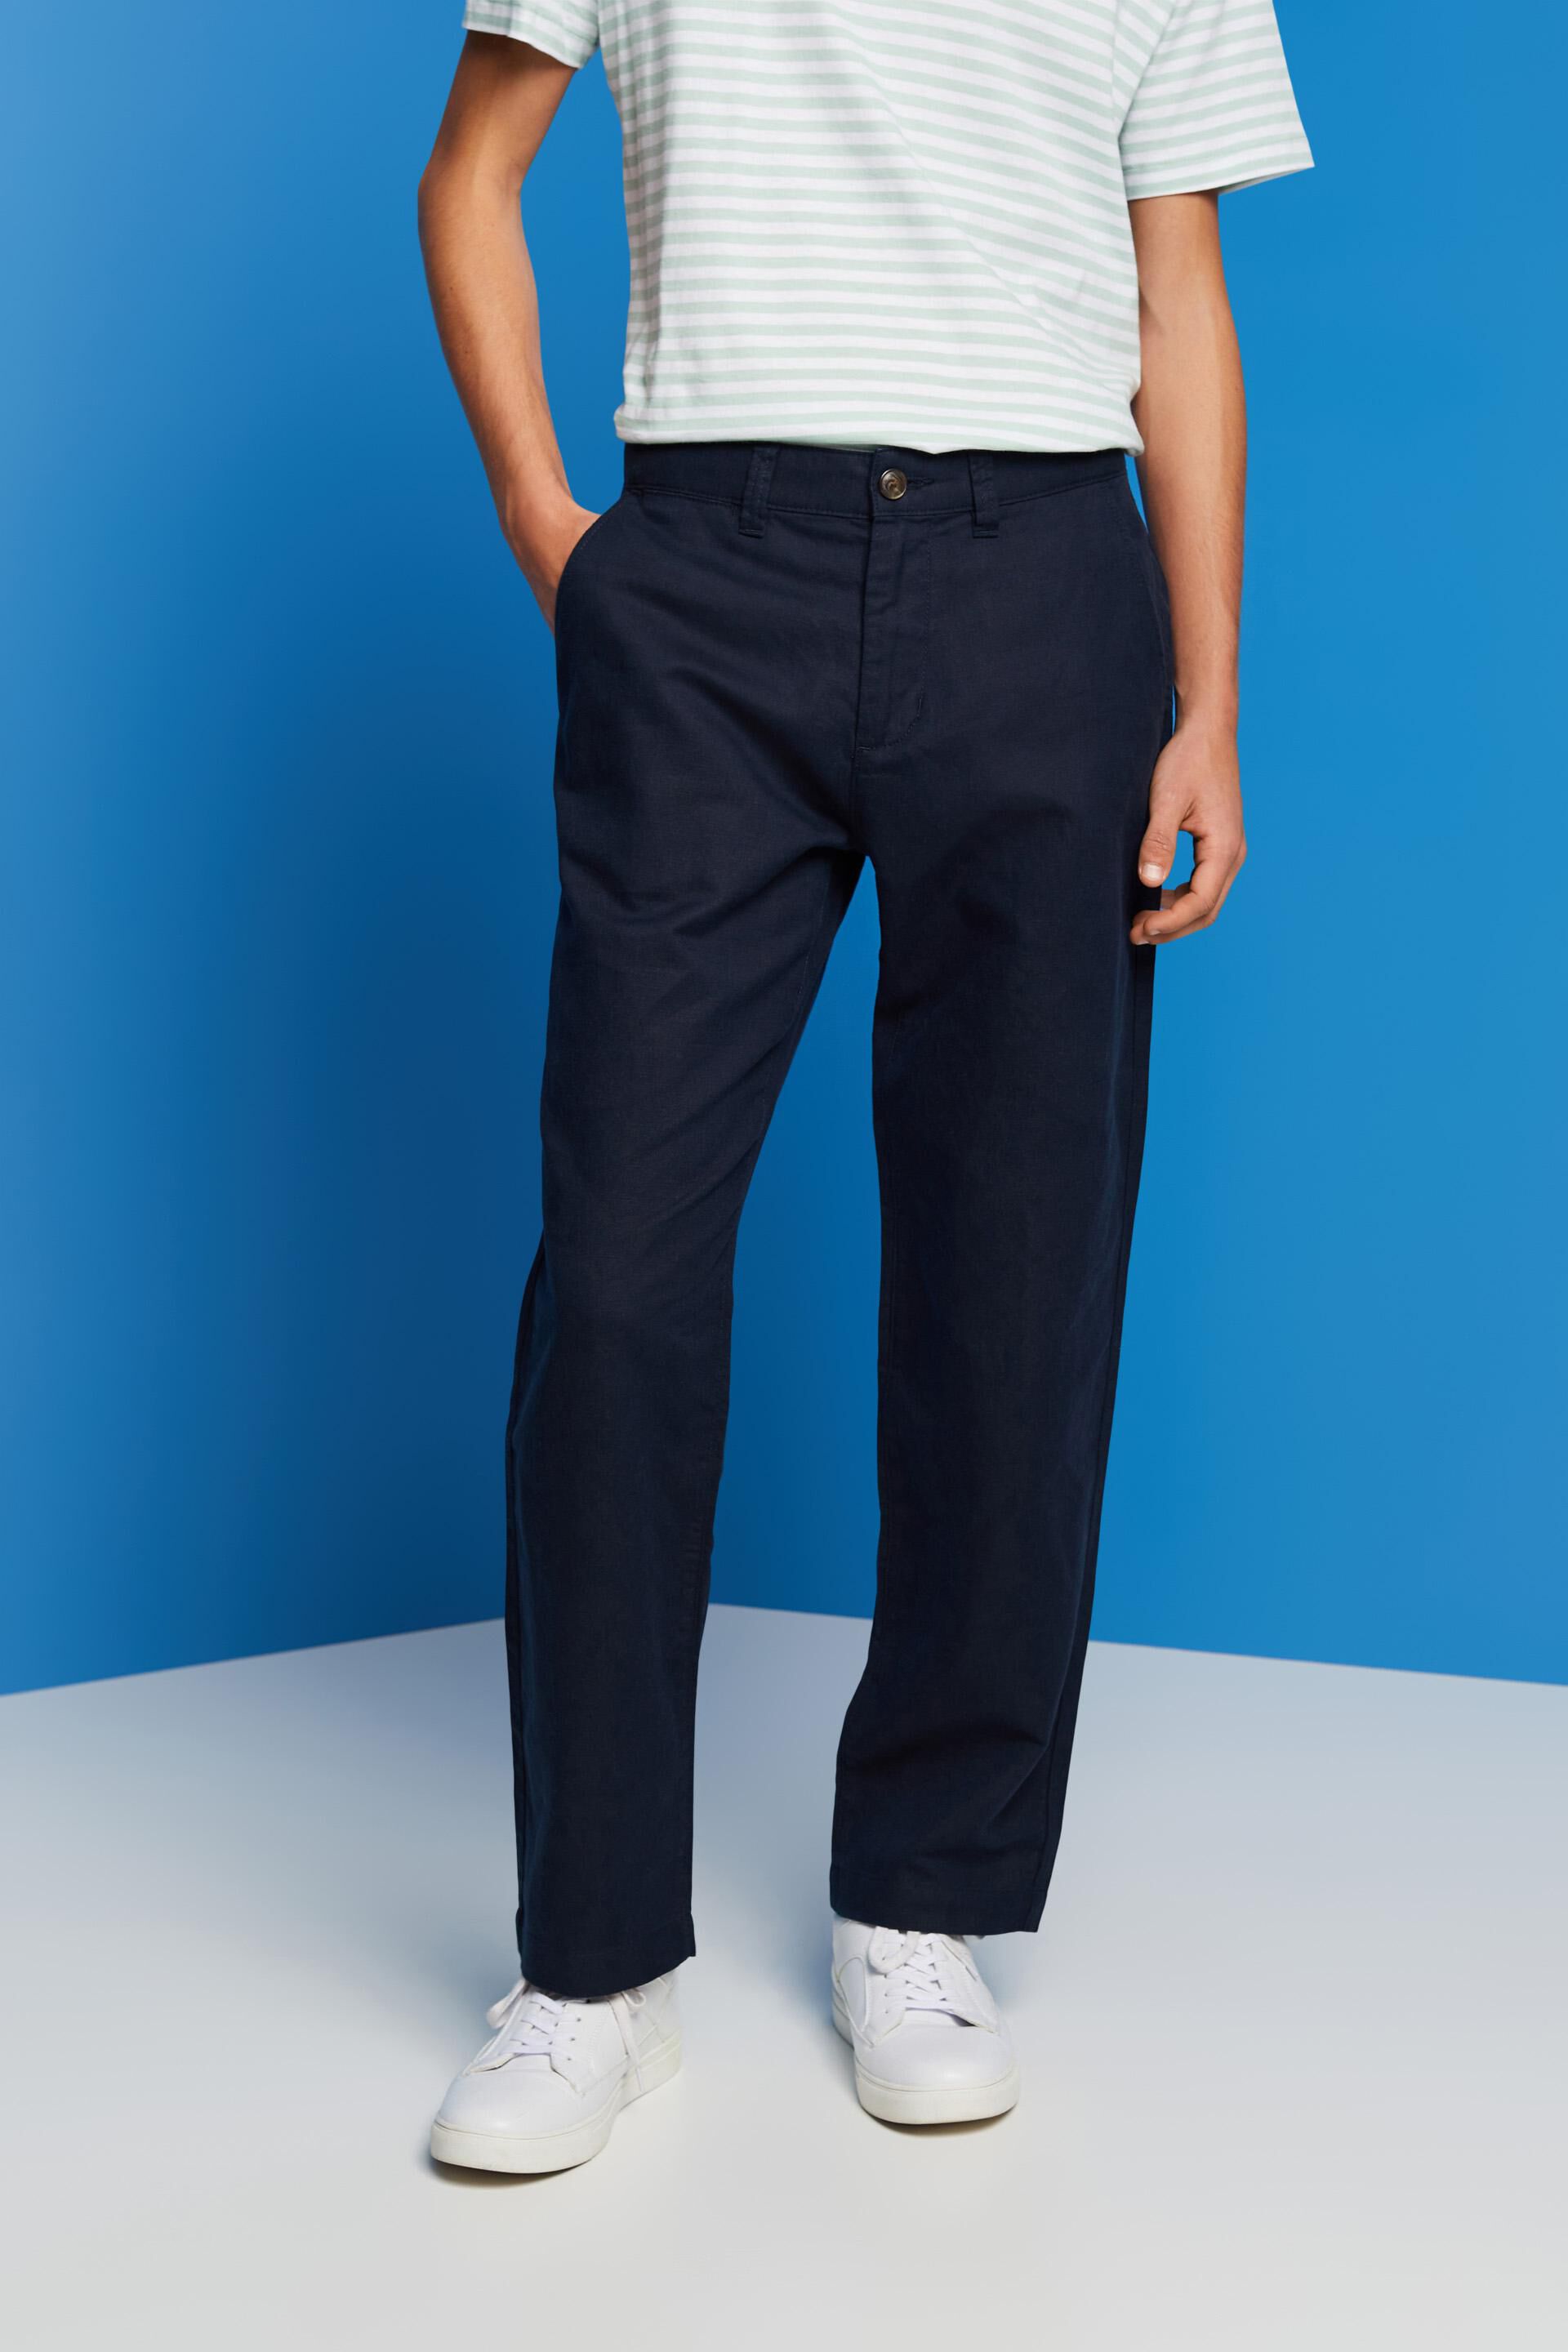 Buy ESPRIT Men Beige Slim Fit Trousers - Trousers for Men 1896978 | Myntra